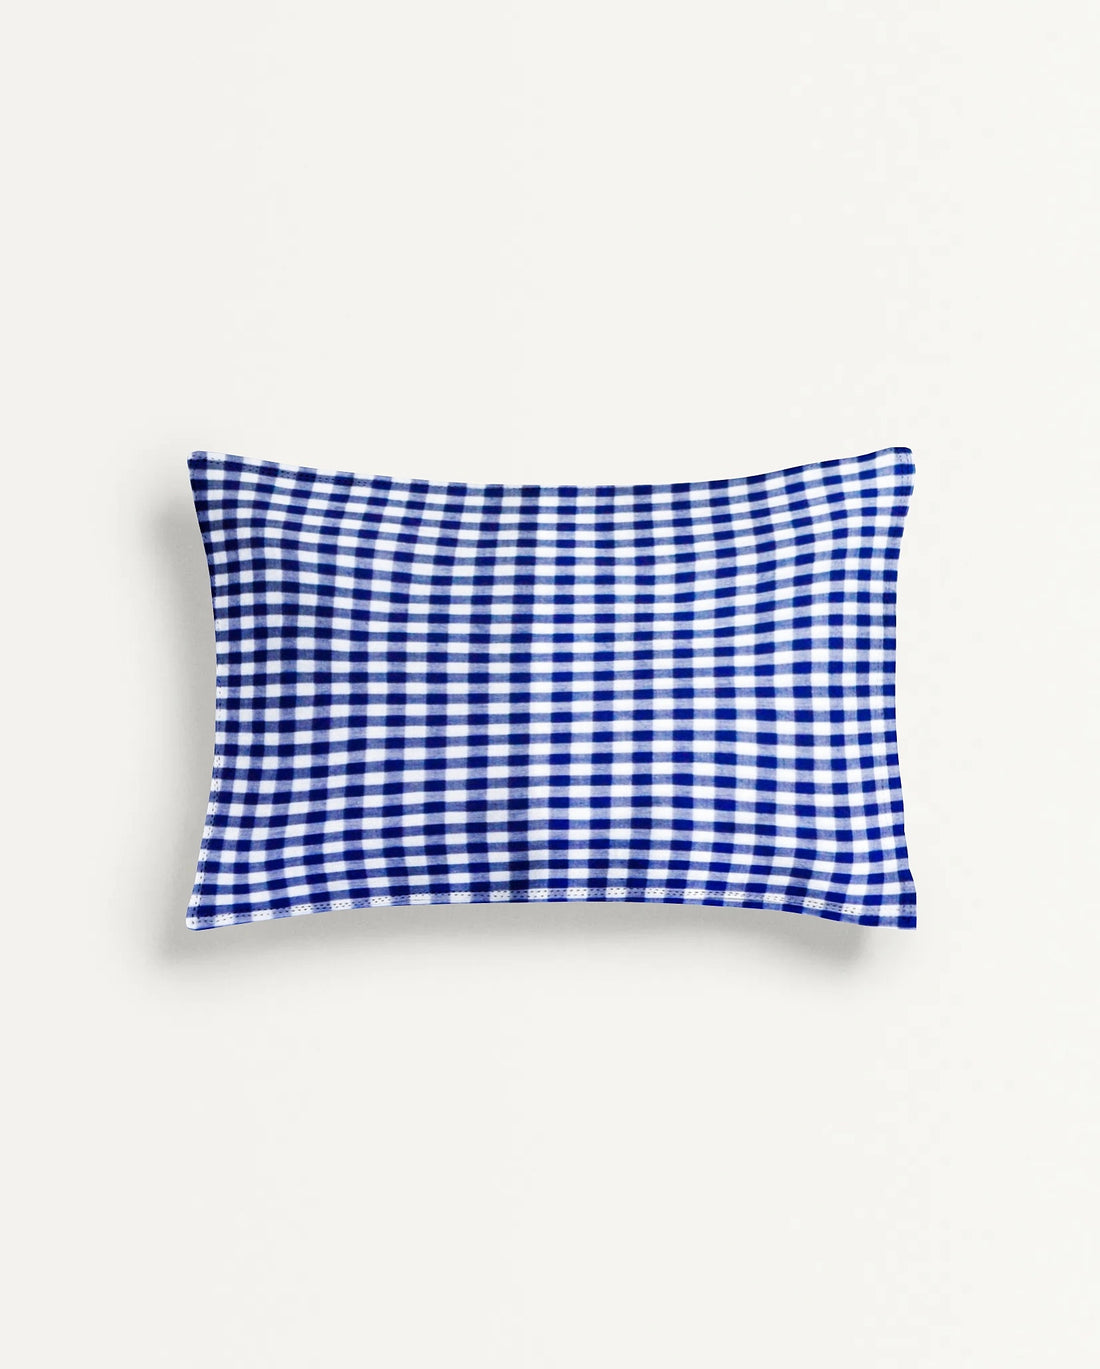 ‘Navy Checks’ Organic Baby Pillow Cover